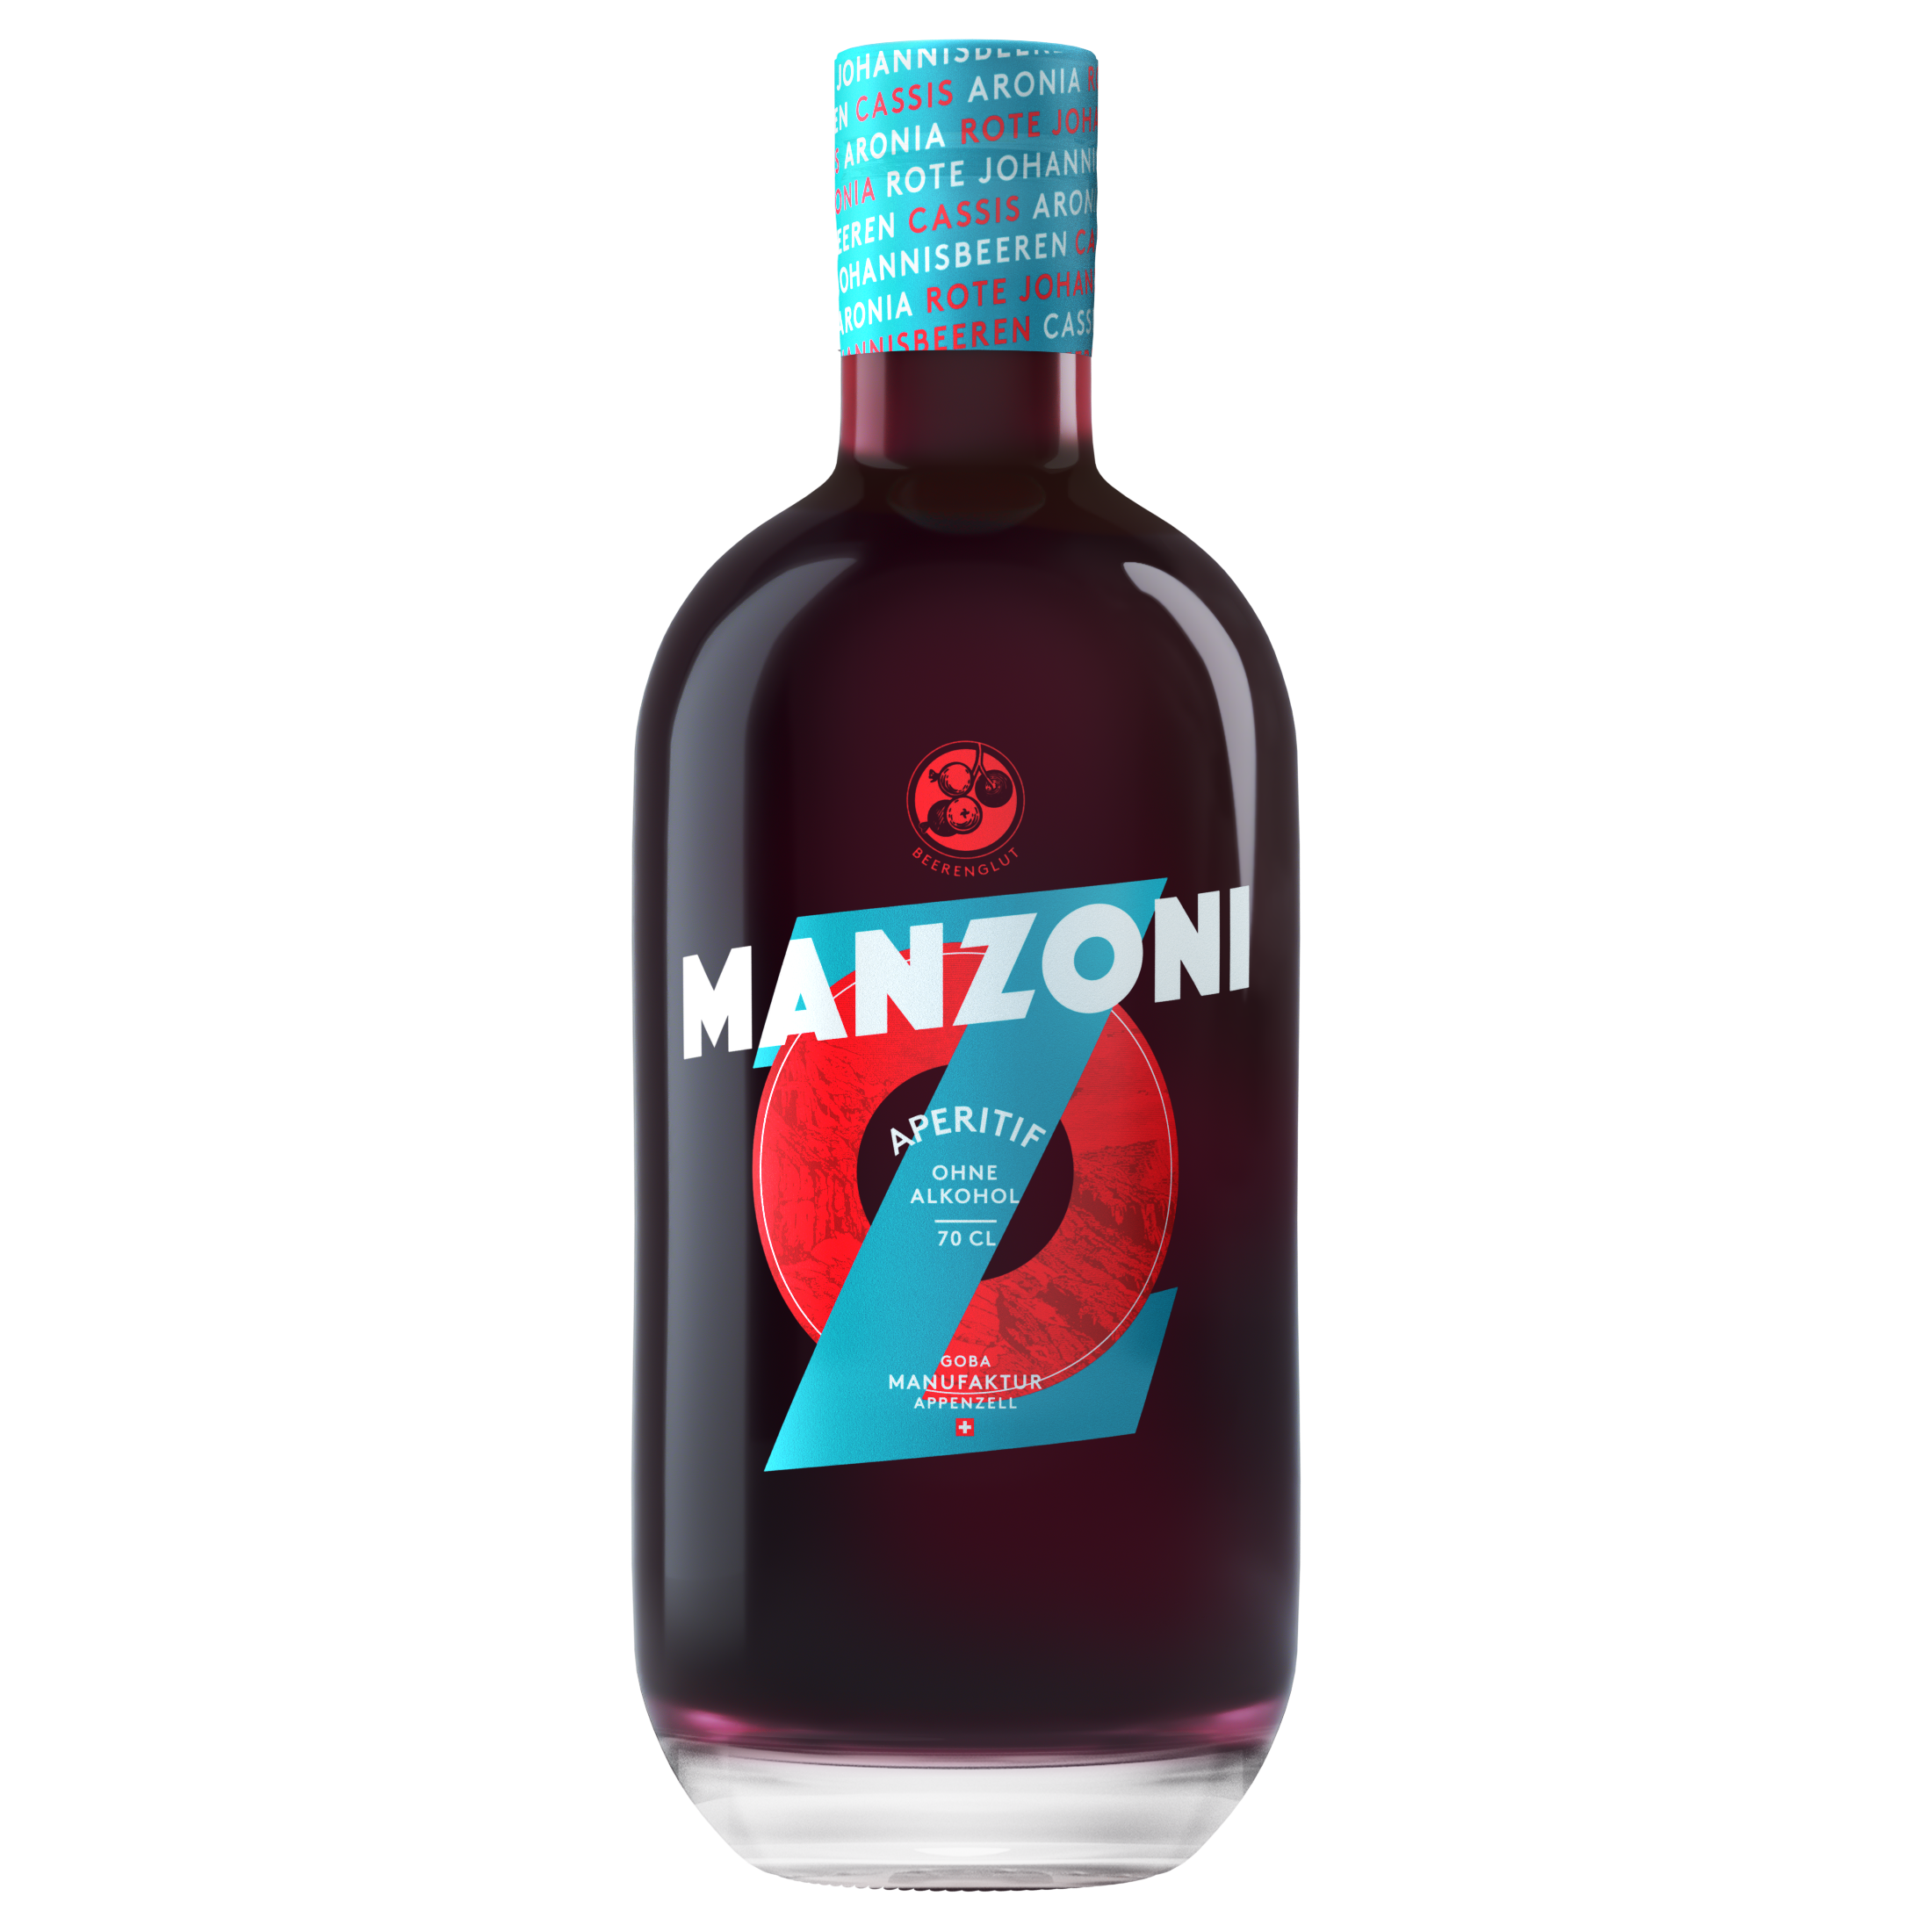 Manzoni - die Beerenglut alkoholfreier Aperitif